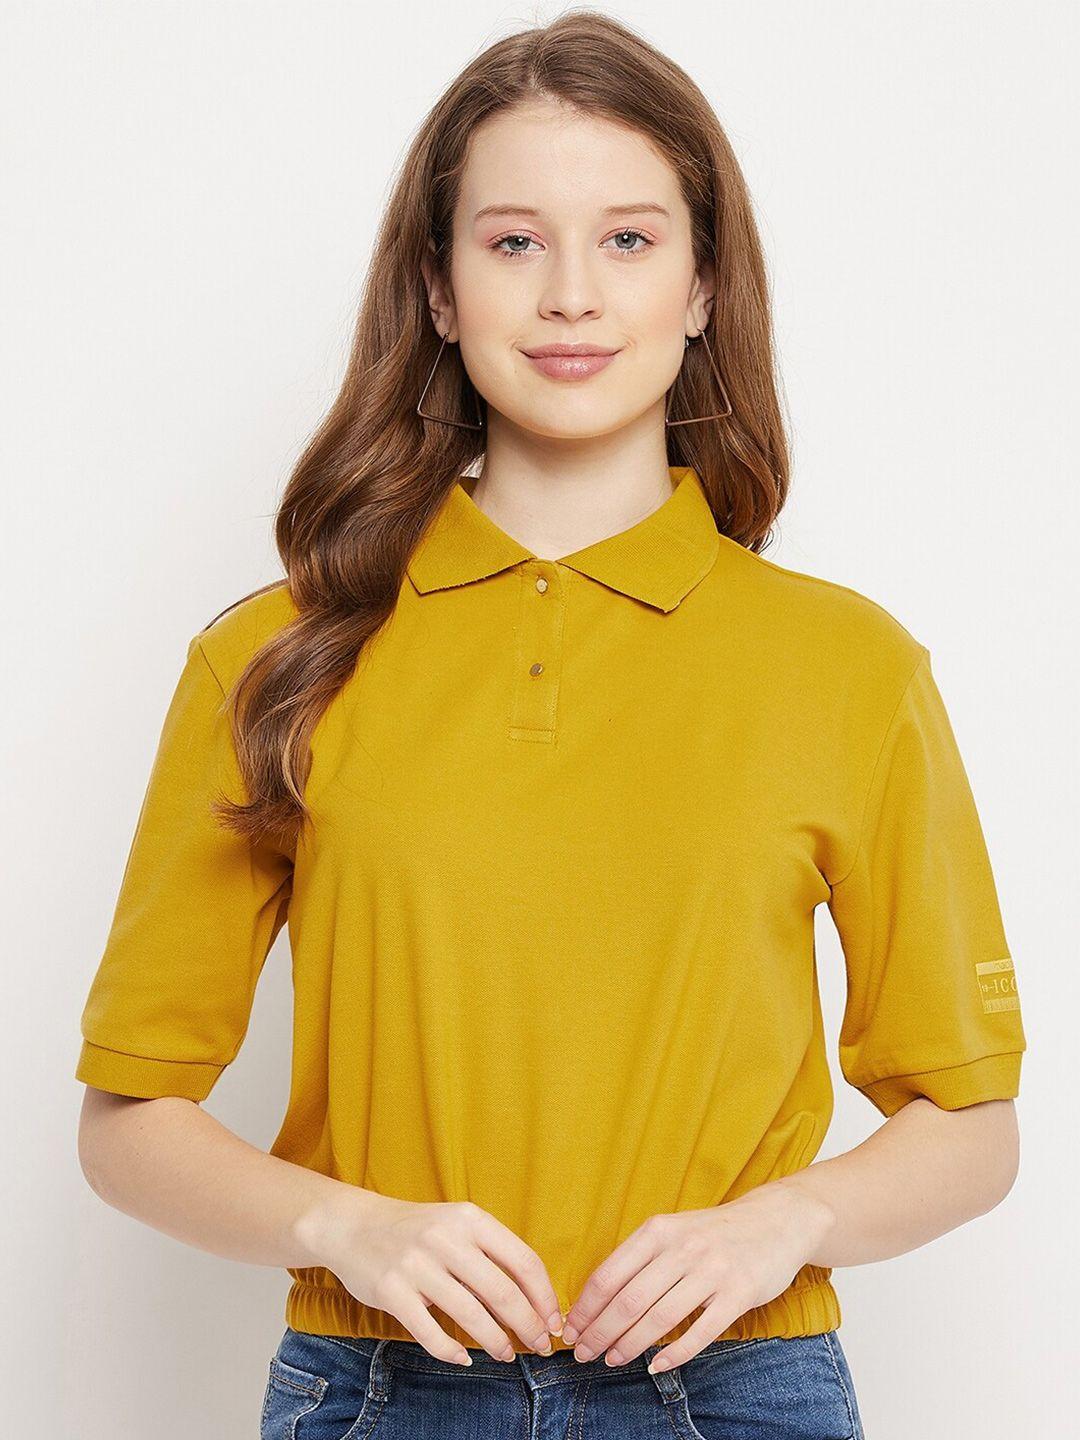 madame mustard yellow shirt style top